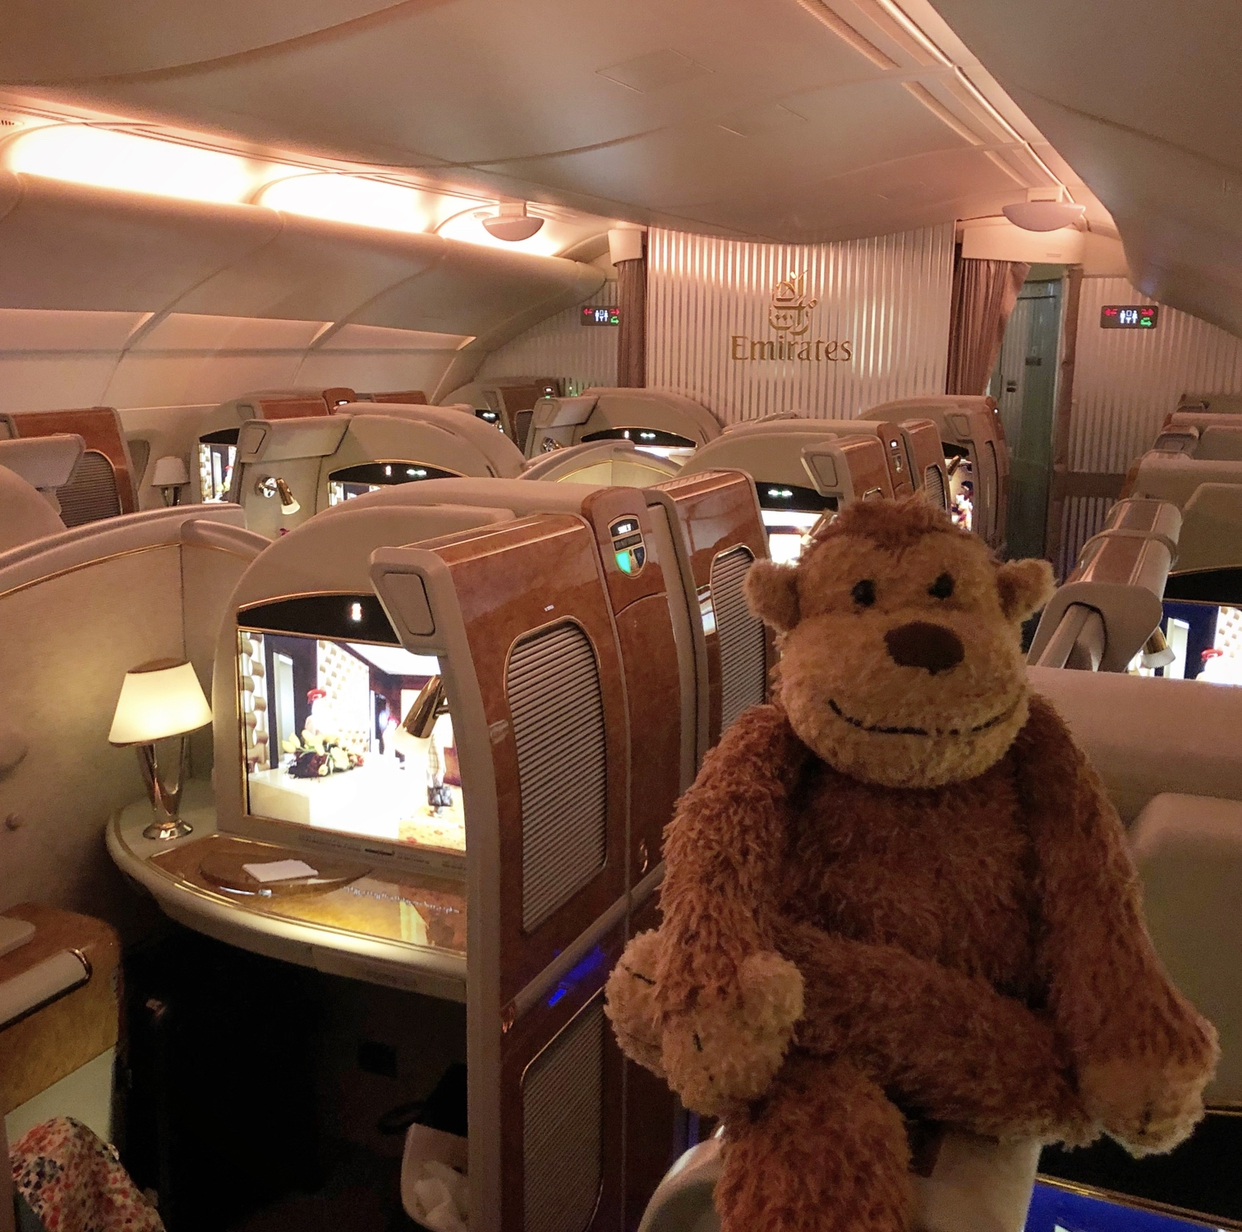 a stuffed animal on a plane